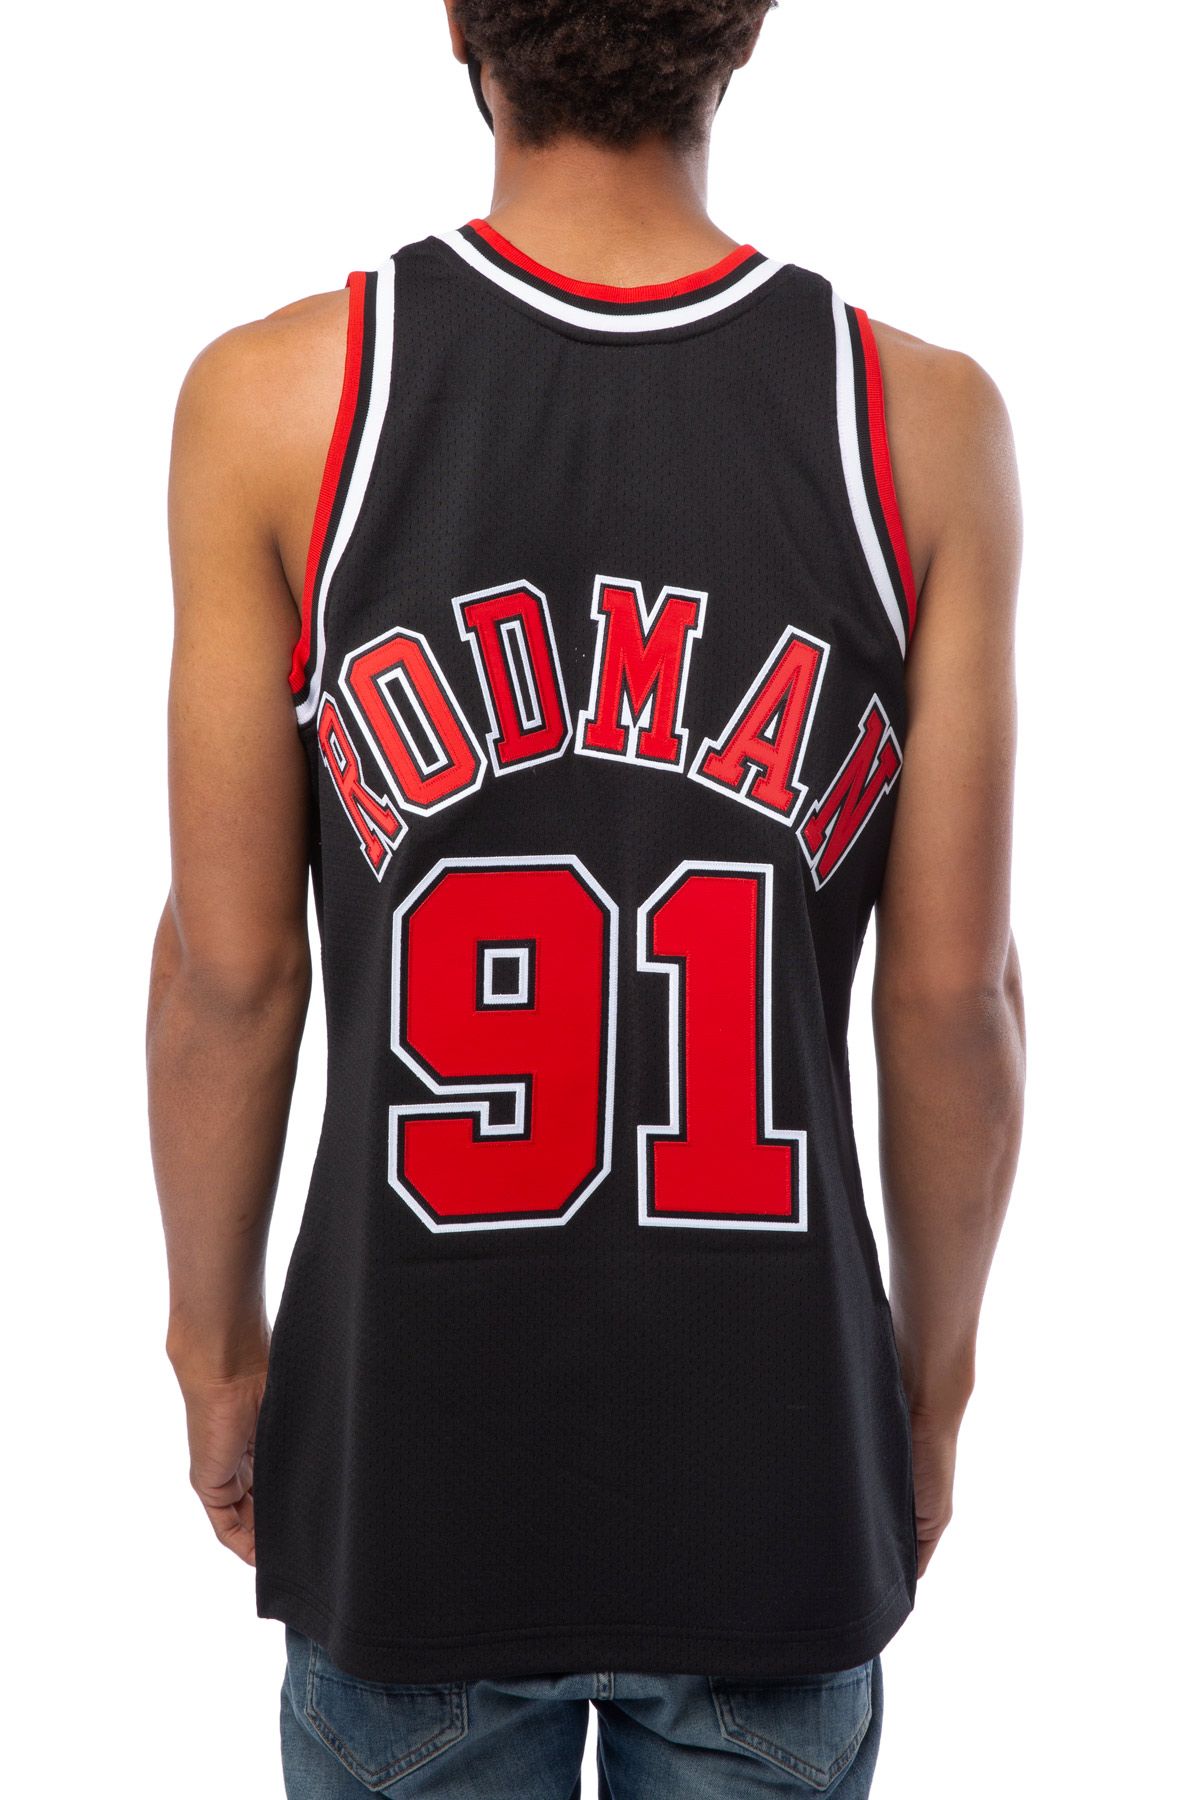 Mitchell & Ness Chicago Bulls Dennis Rodman #91 NBA 97-98 Swingman Jersey  Red